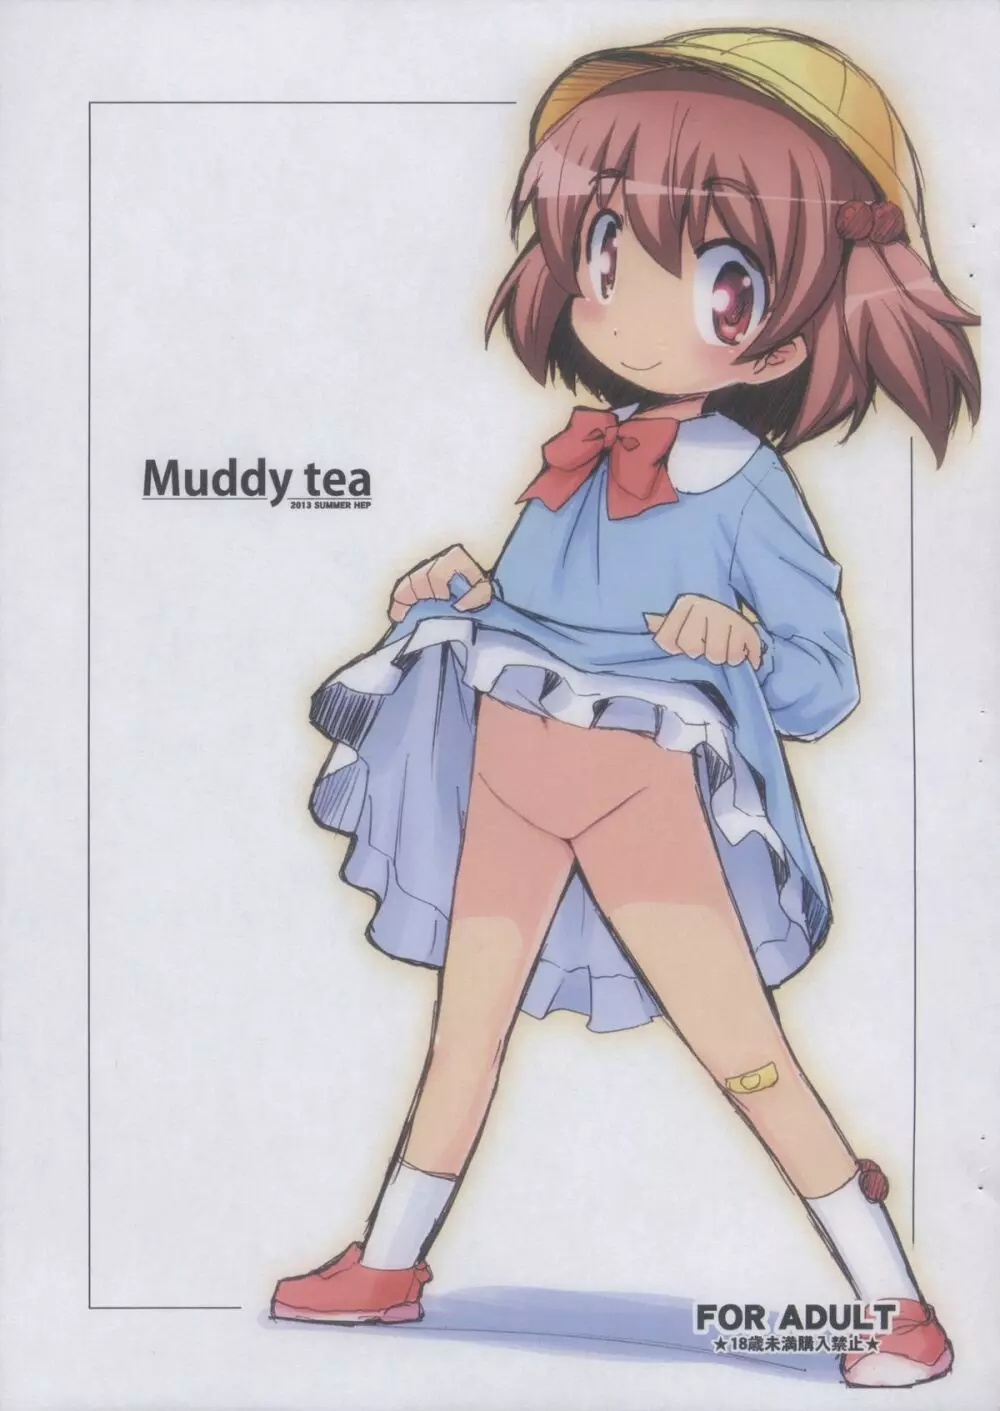 Muddy tea